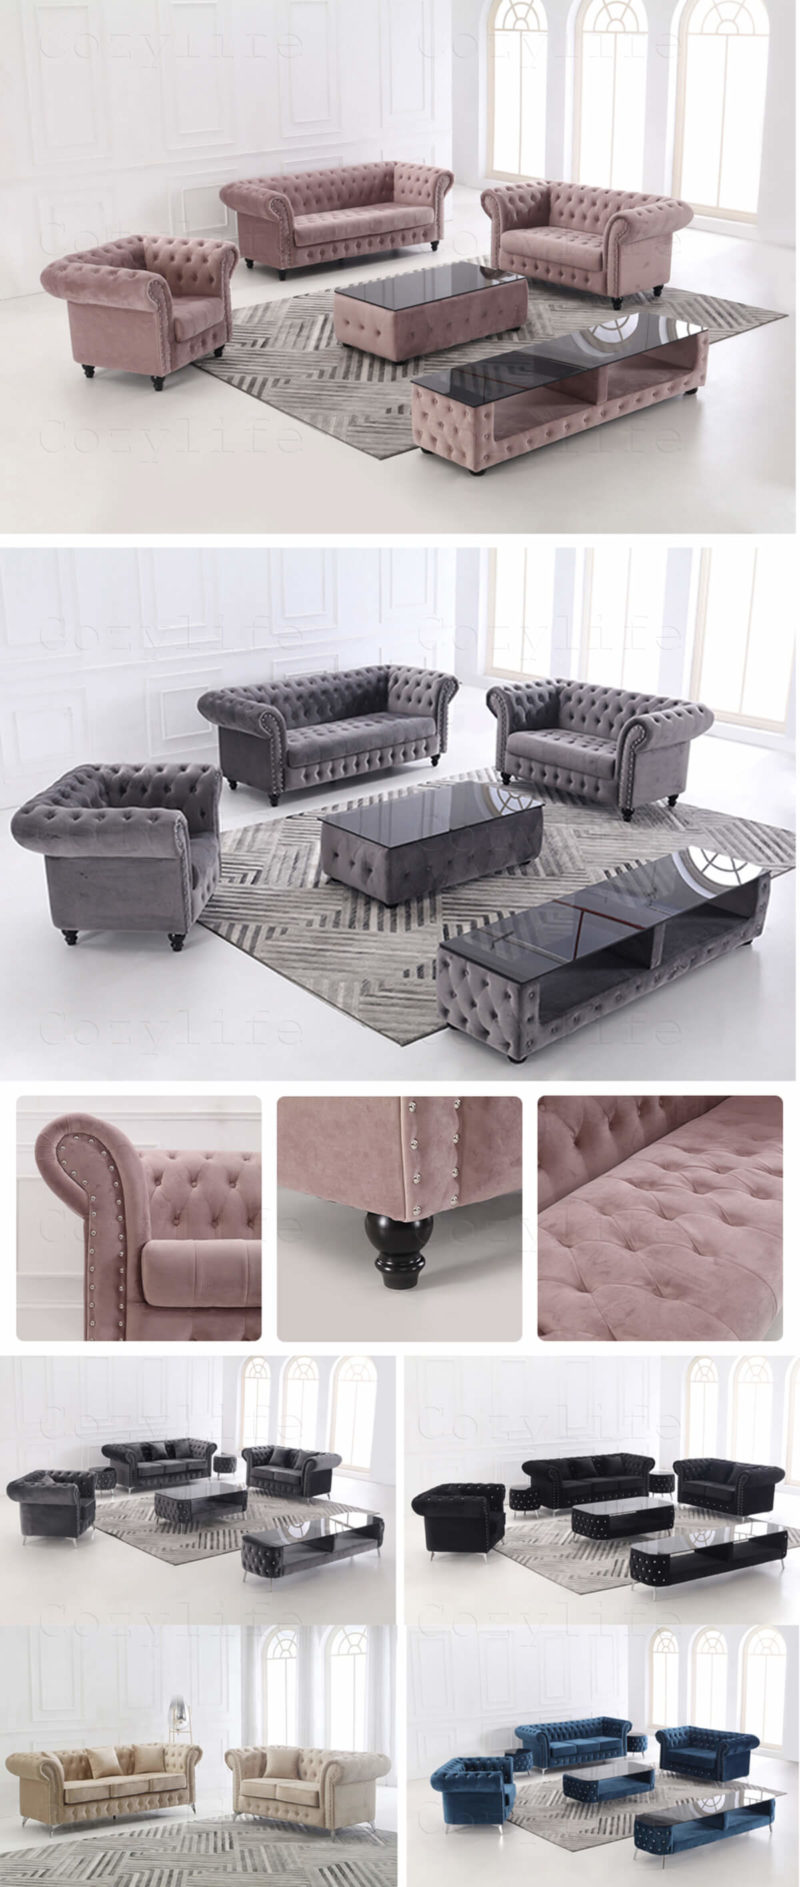 modern chesterfield sofa in multi colors